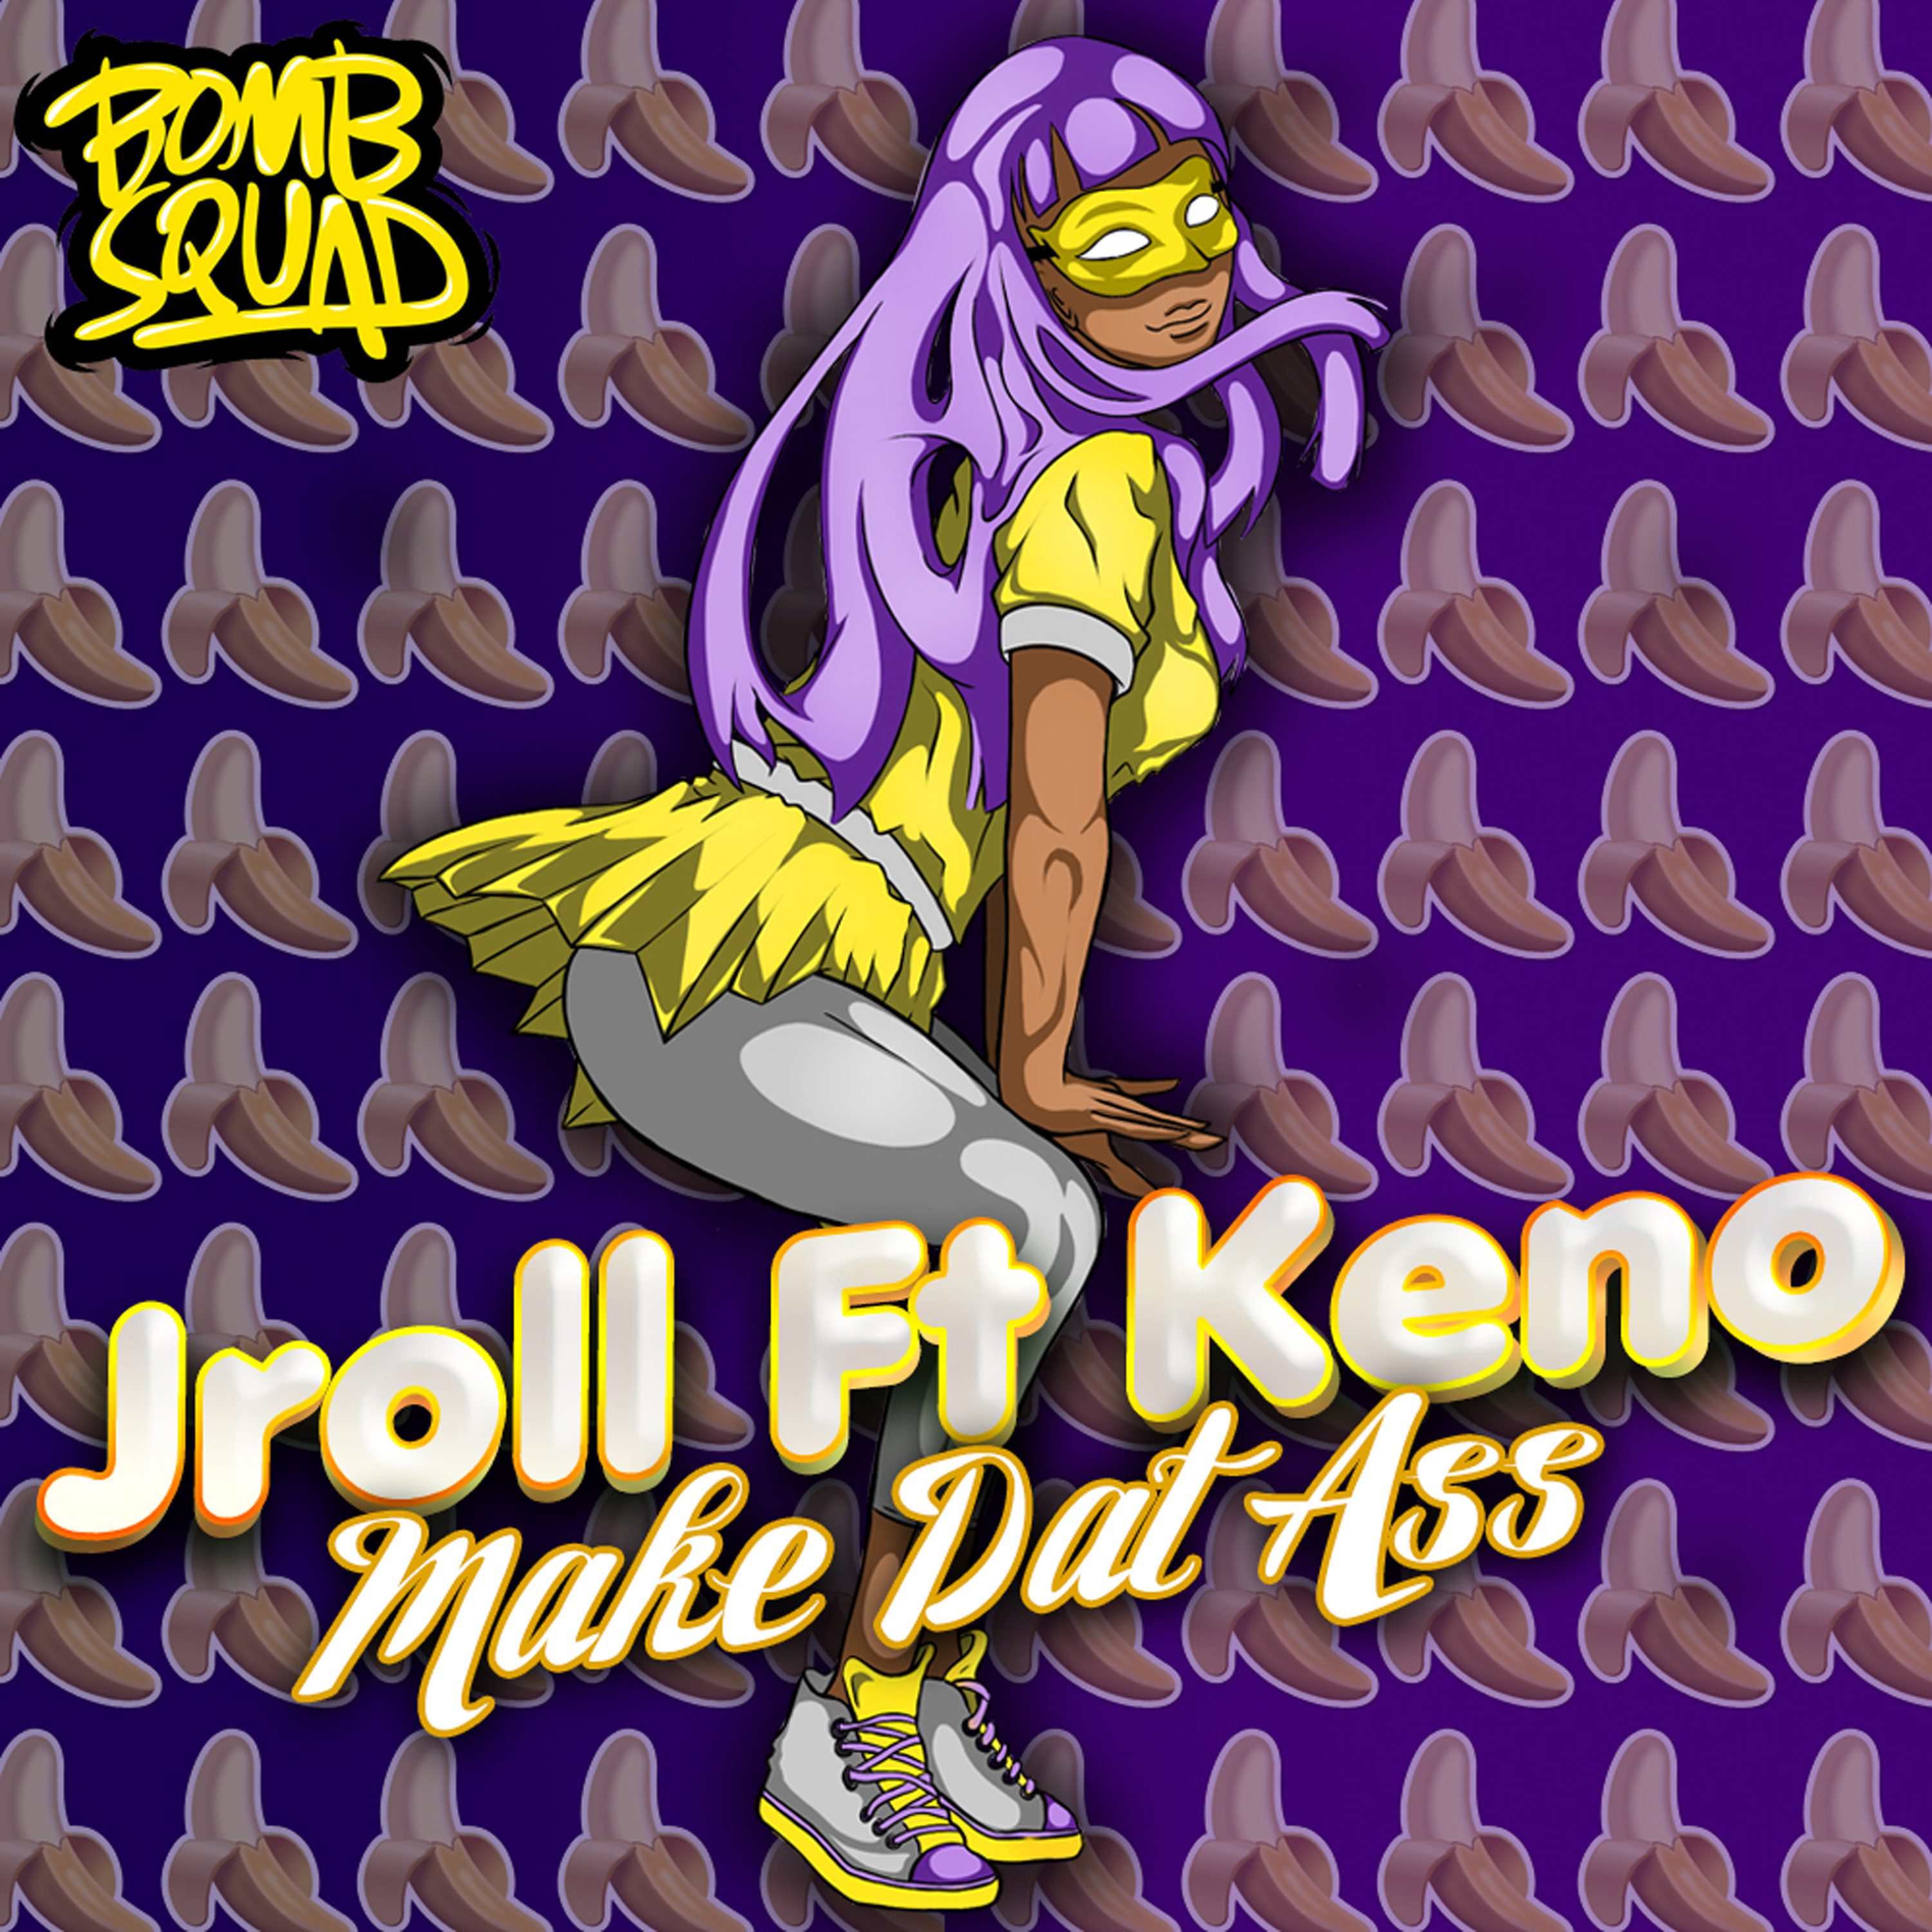 Make Dat Ass (feat. Keno) [Chris Royal Remix]